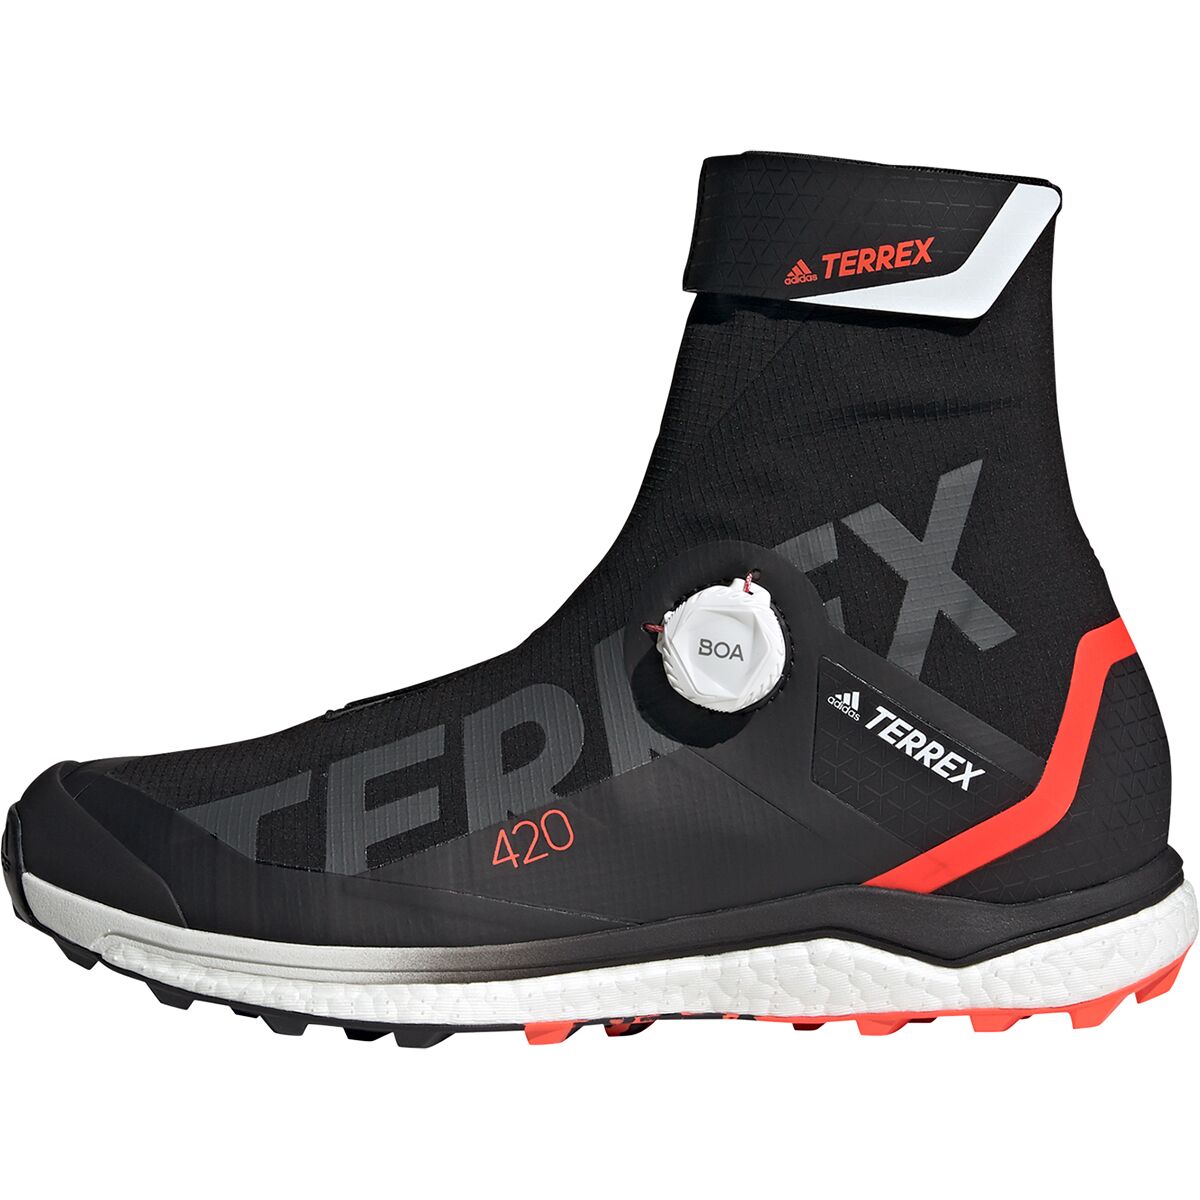 Adidas Outdoor Terrex Agravic Tech Pro Trail Running Shoe - Men's - Men